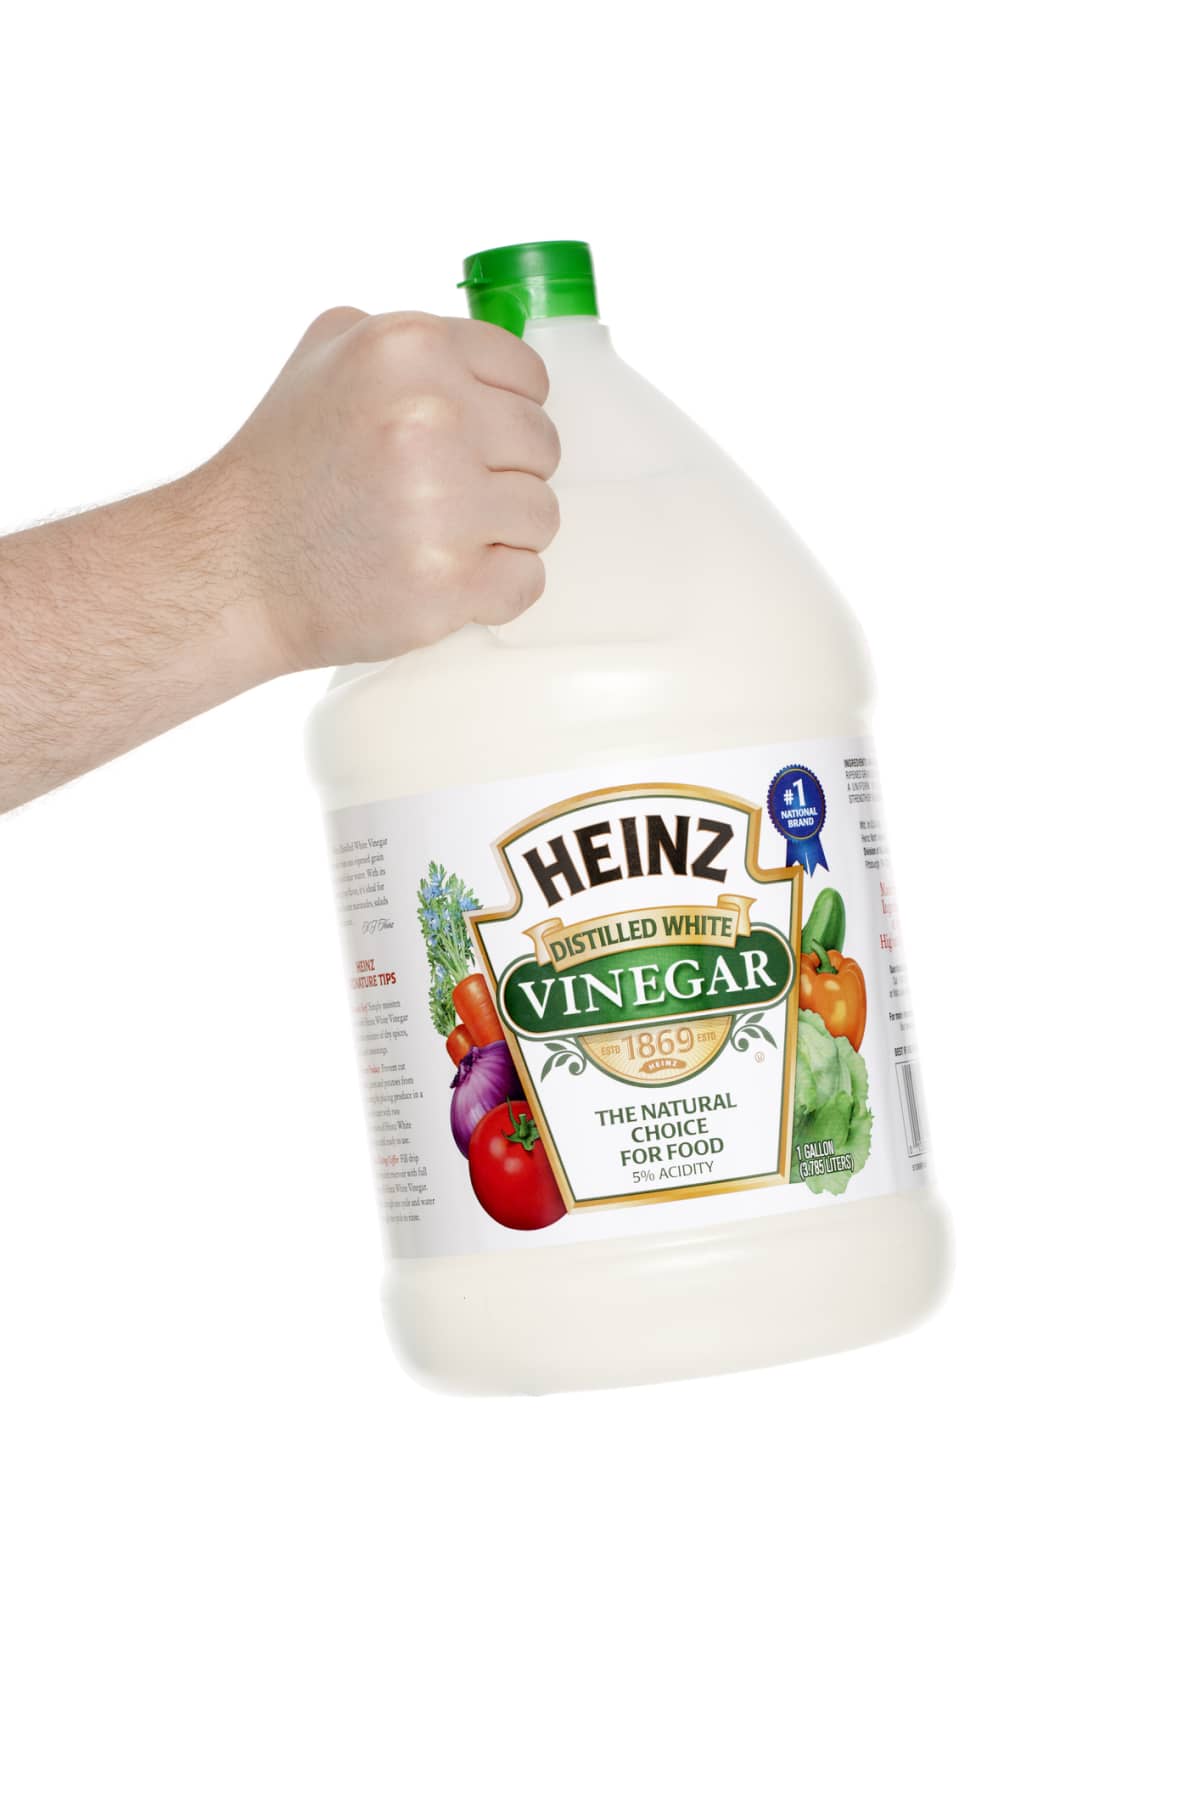 A person holding a jar of distilled white vinegar